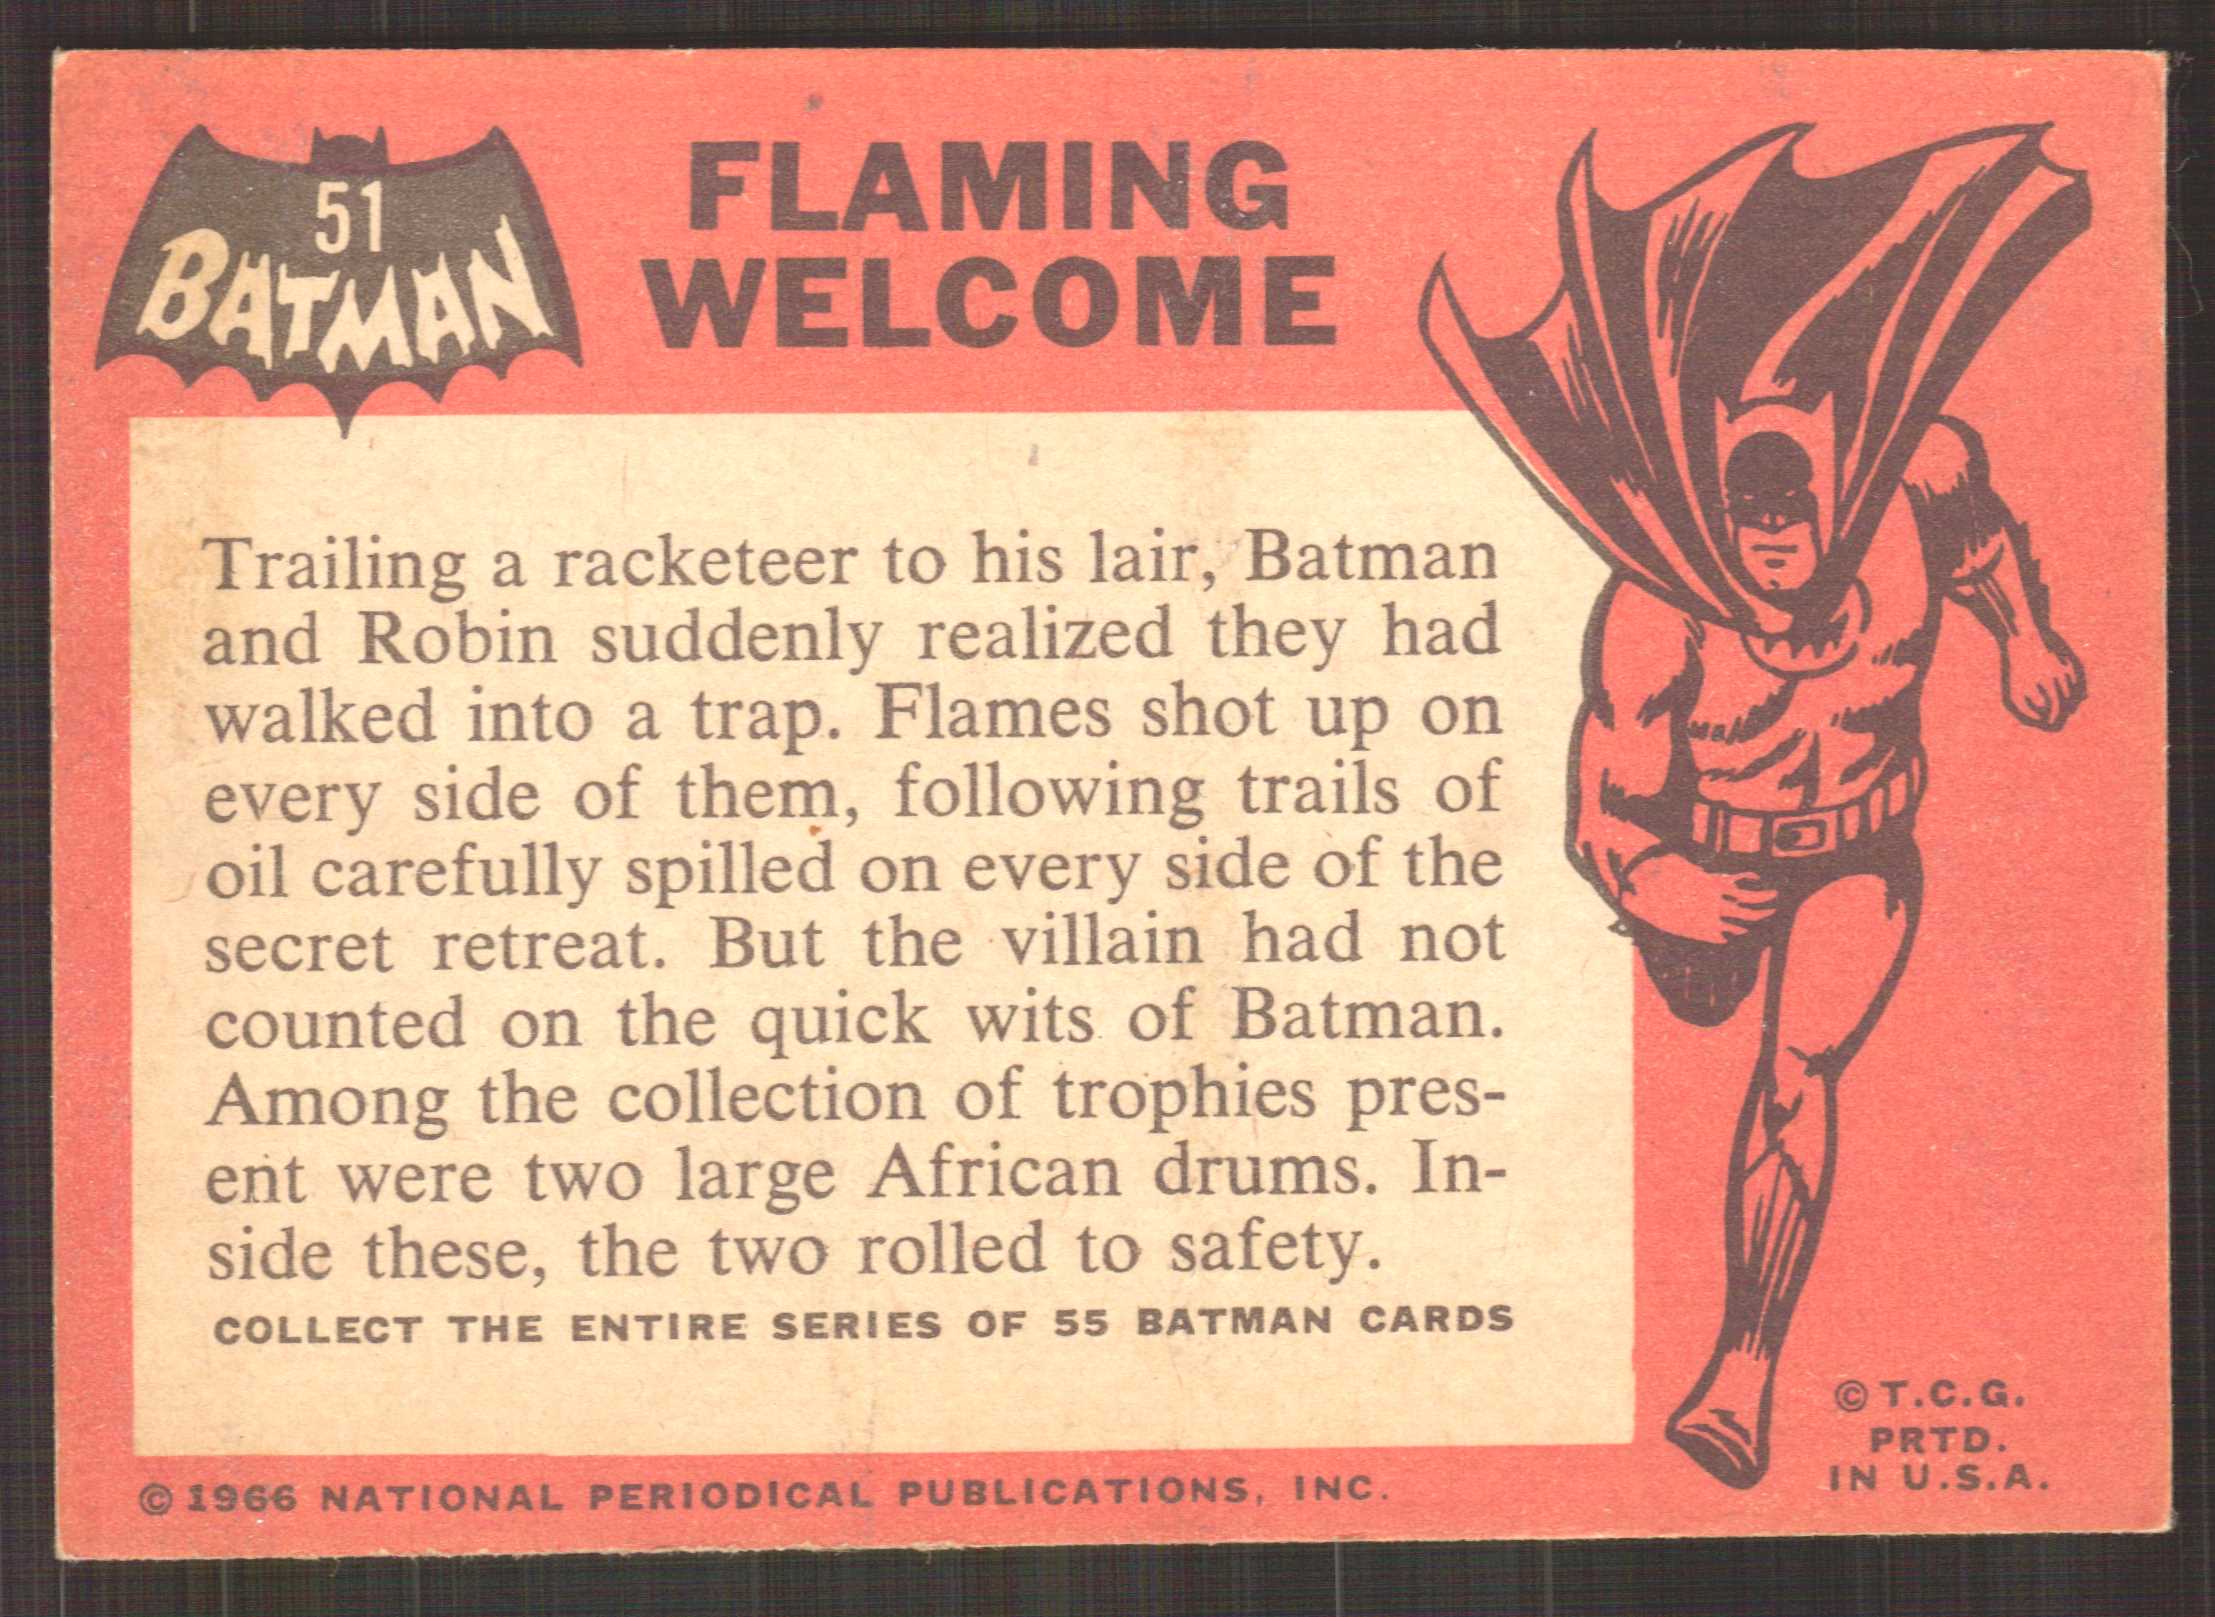 1966 Topps Batman Black Bat #51 Flaming Welcome back image